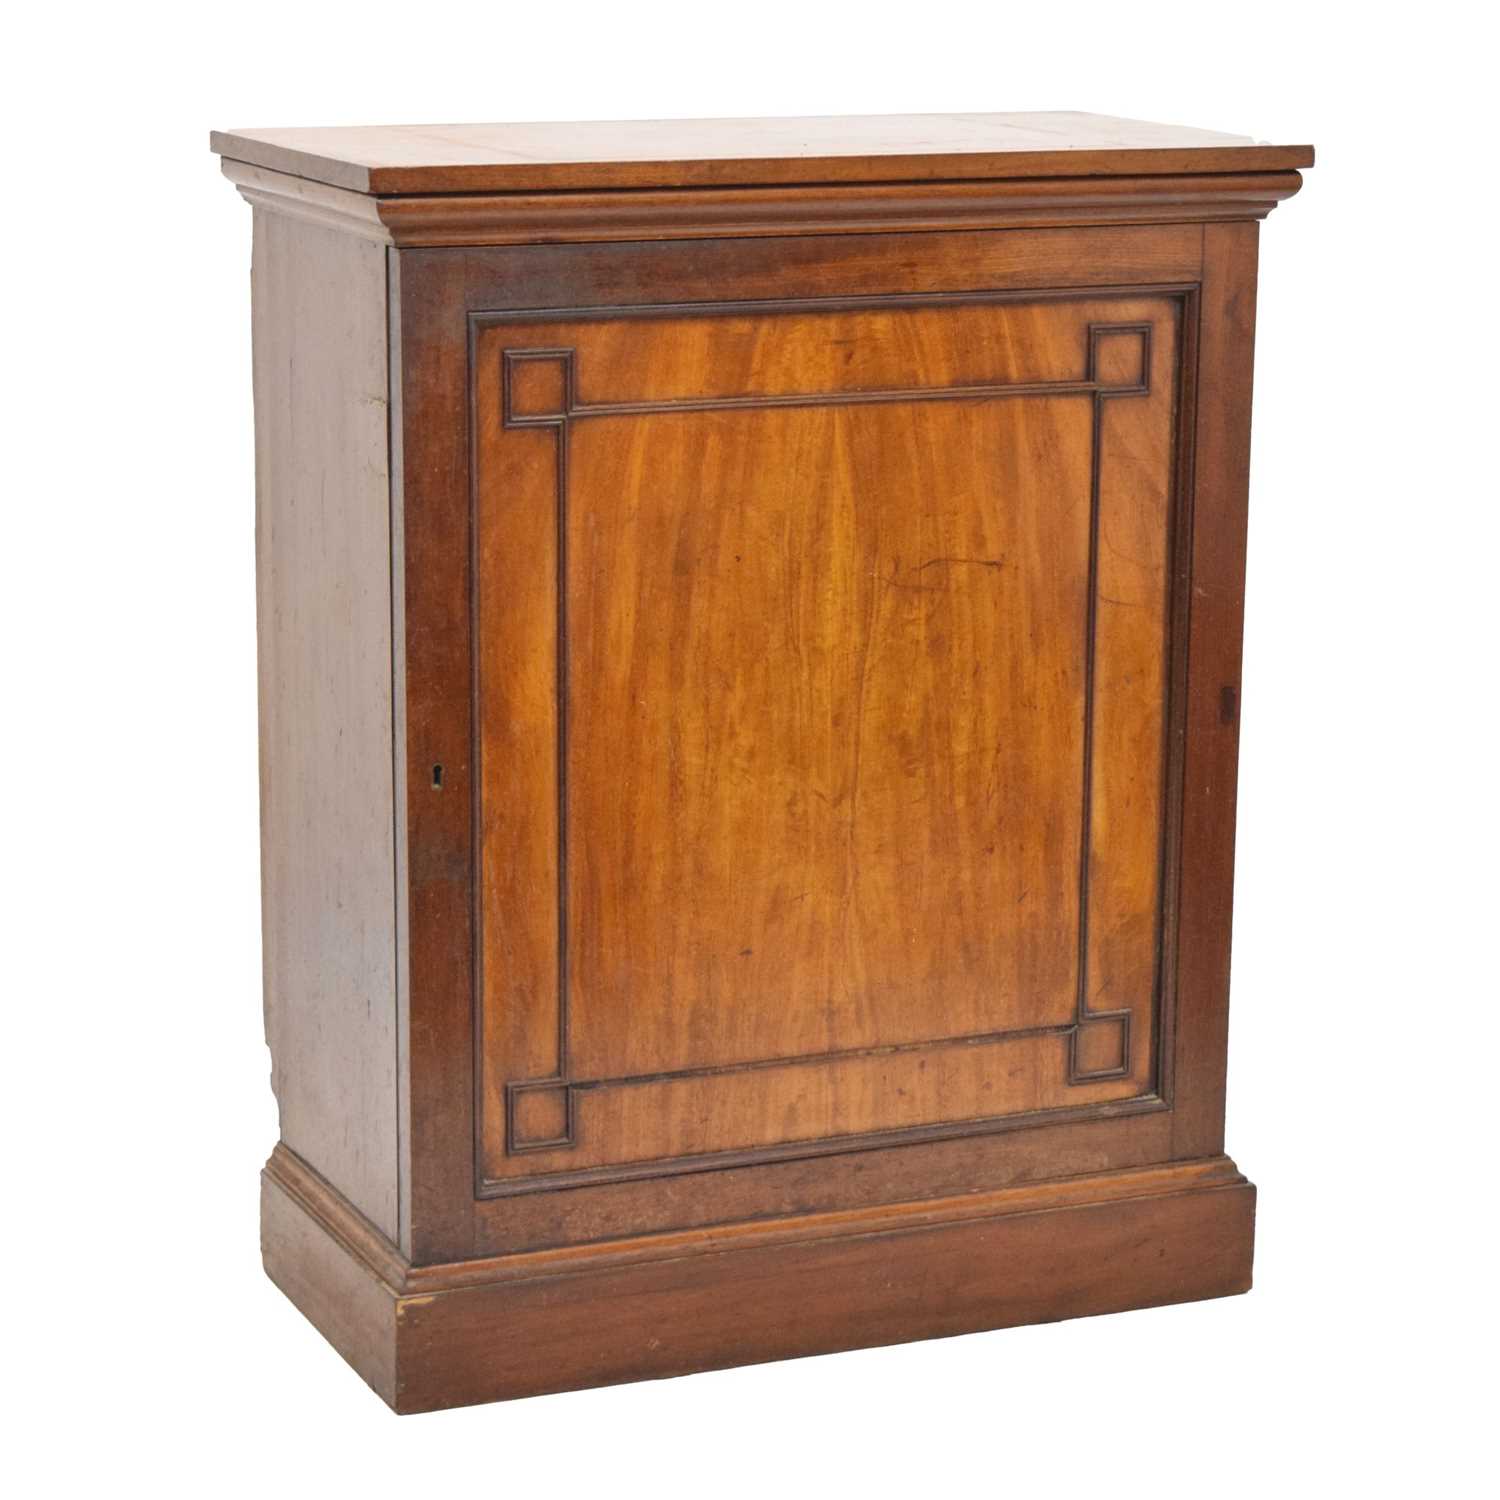 Late 19th or early 20th century mahogany single door cabinet